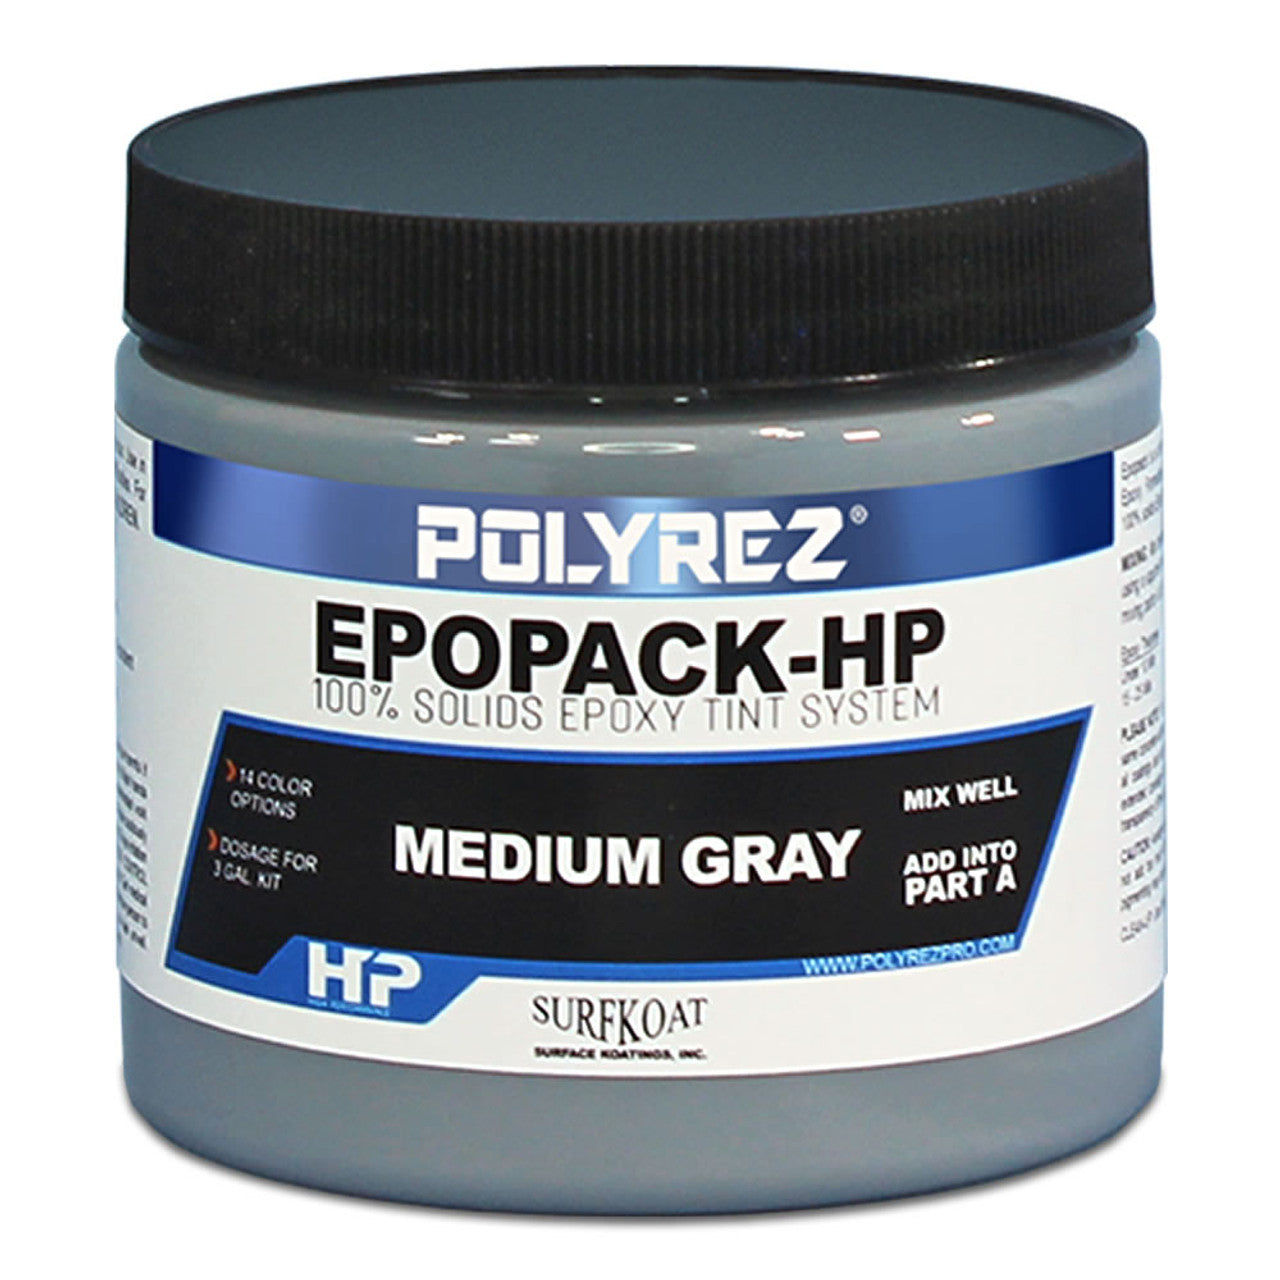 Epopack-HP (Black) 1 Pint